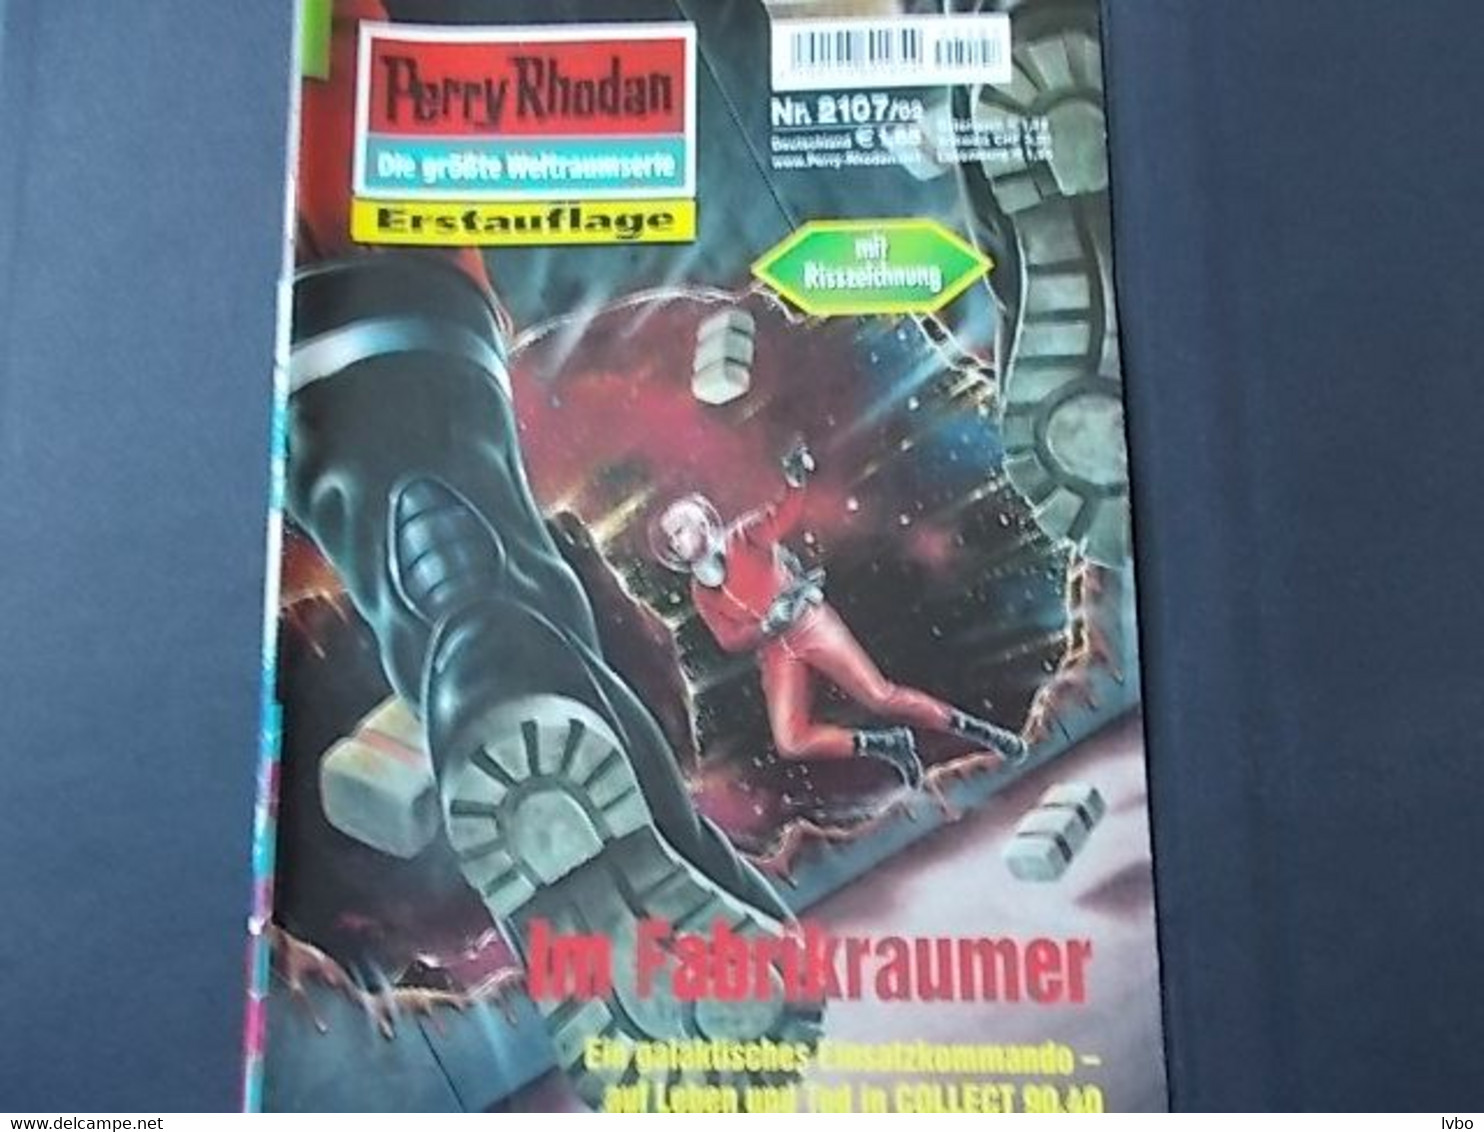 Perry Rhodan Nr 2107 Erstauflage Im Fabrikraumer - Science-Fiction